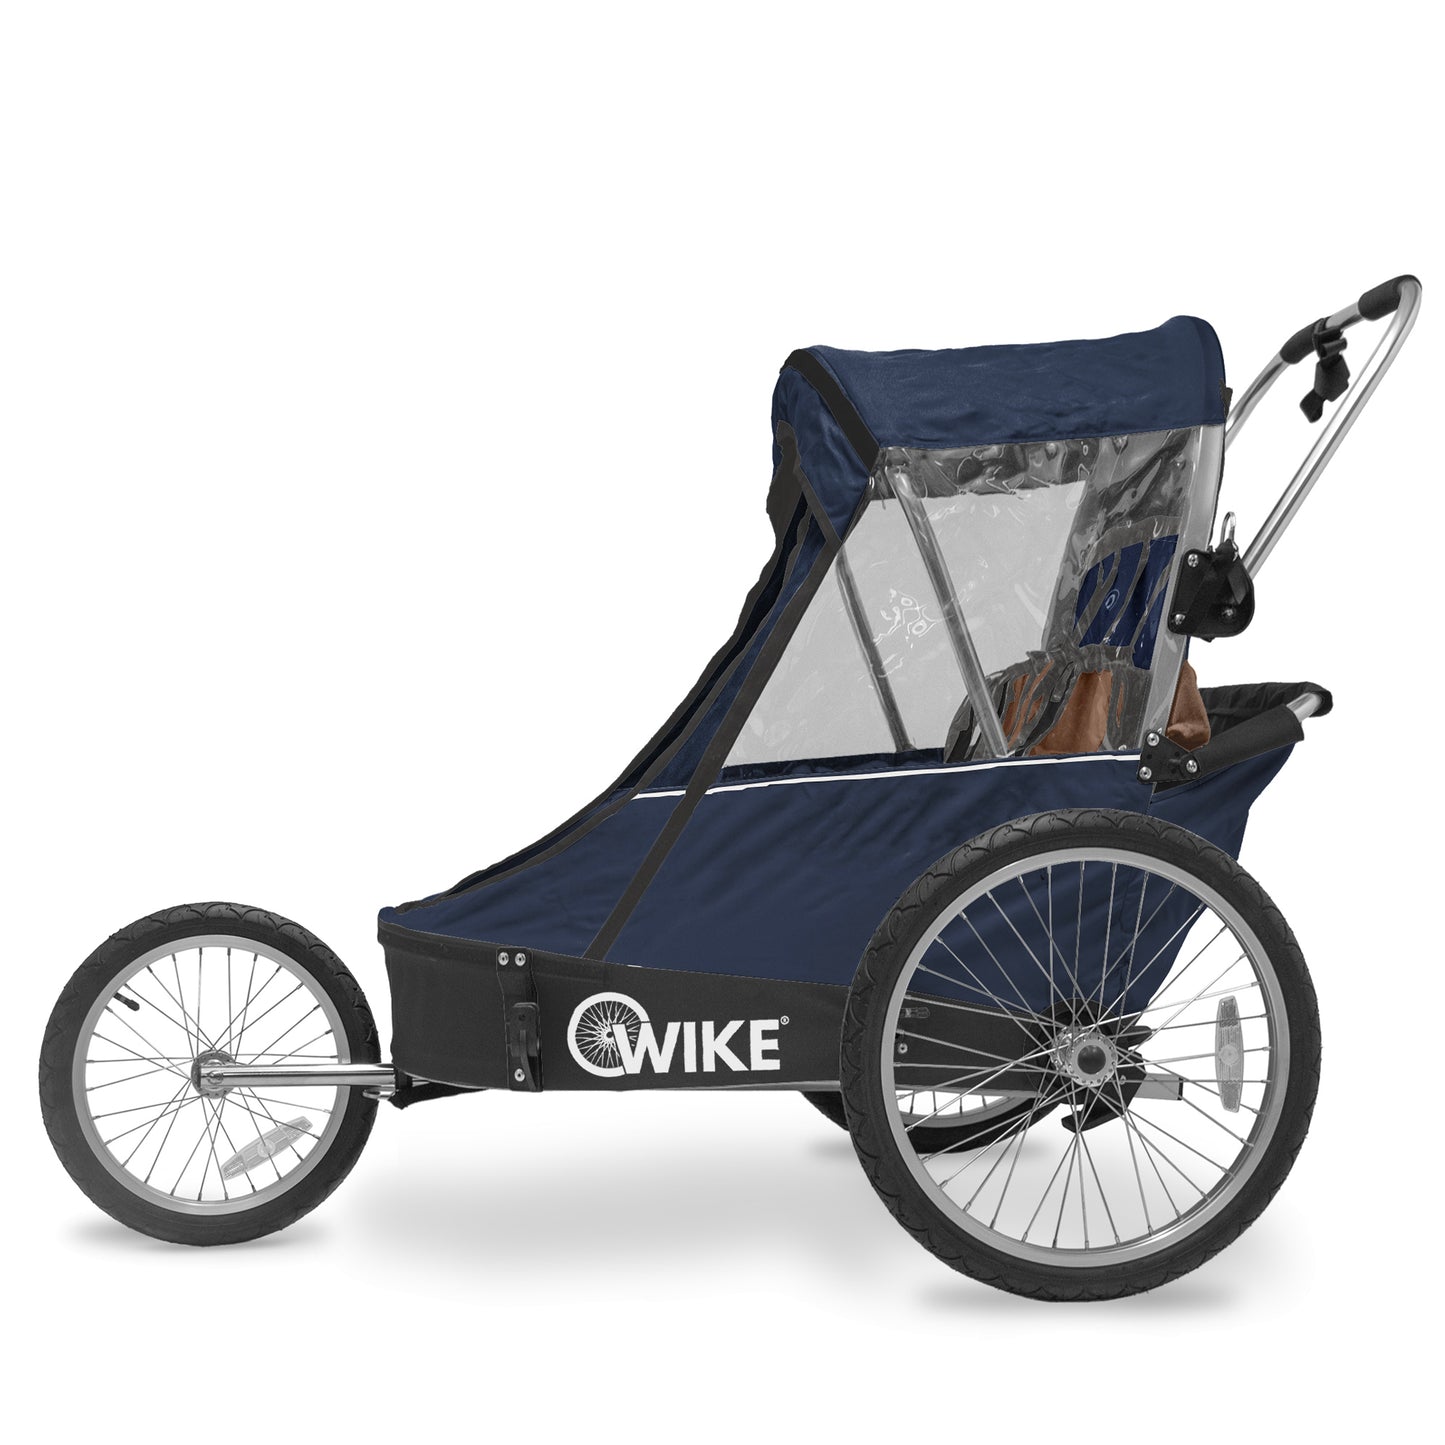 Wike Premium Double Children's Bike Trailer - Includes Stroller